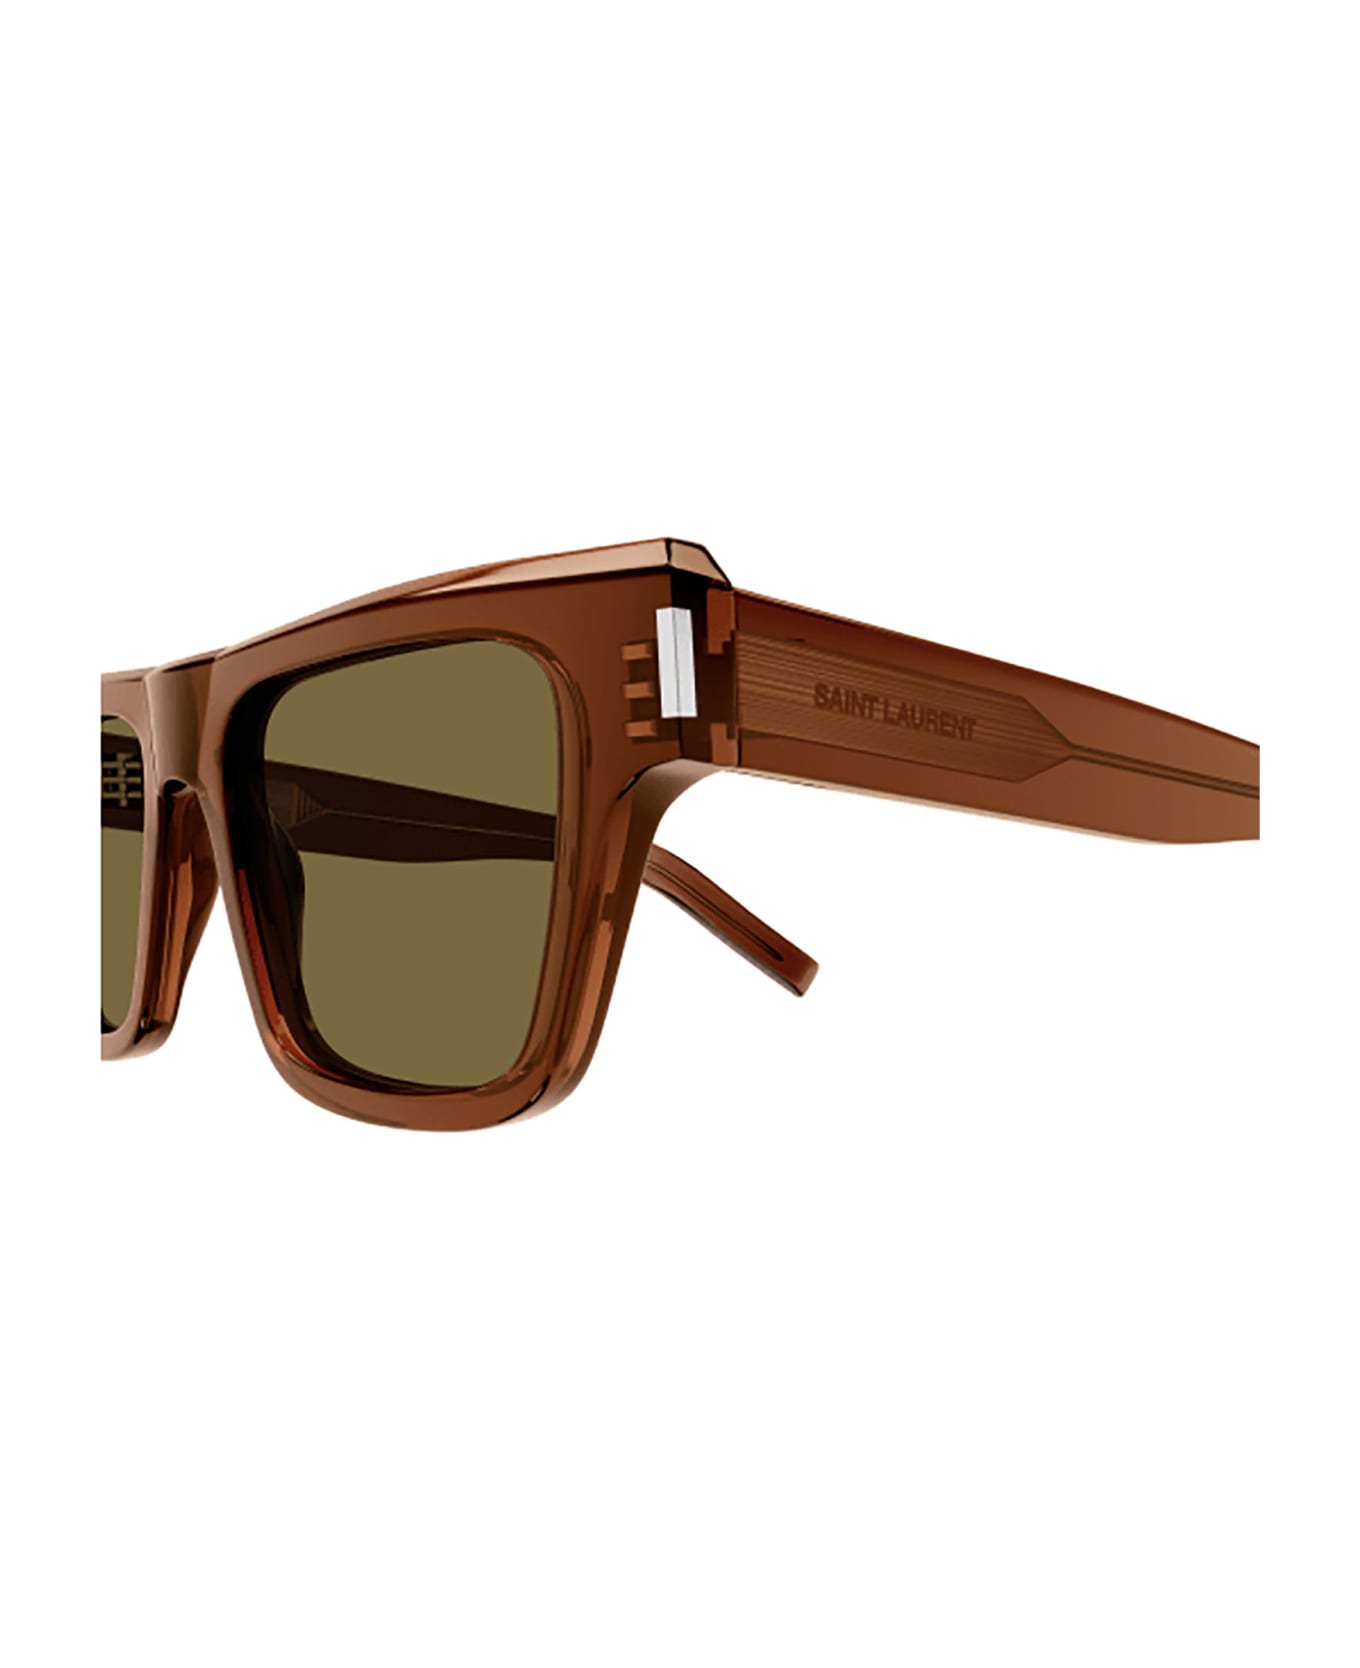 Saint Laurent Eyewear SL 469 Sunglasses tone - Only cat eye sunglasses tone in pearlescent white